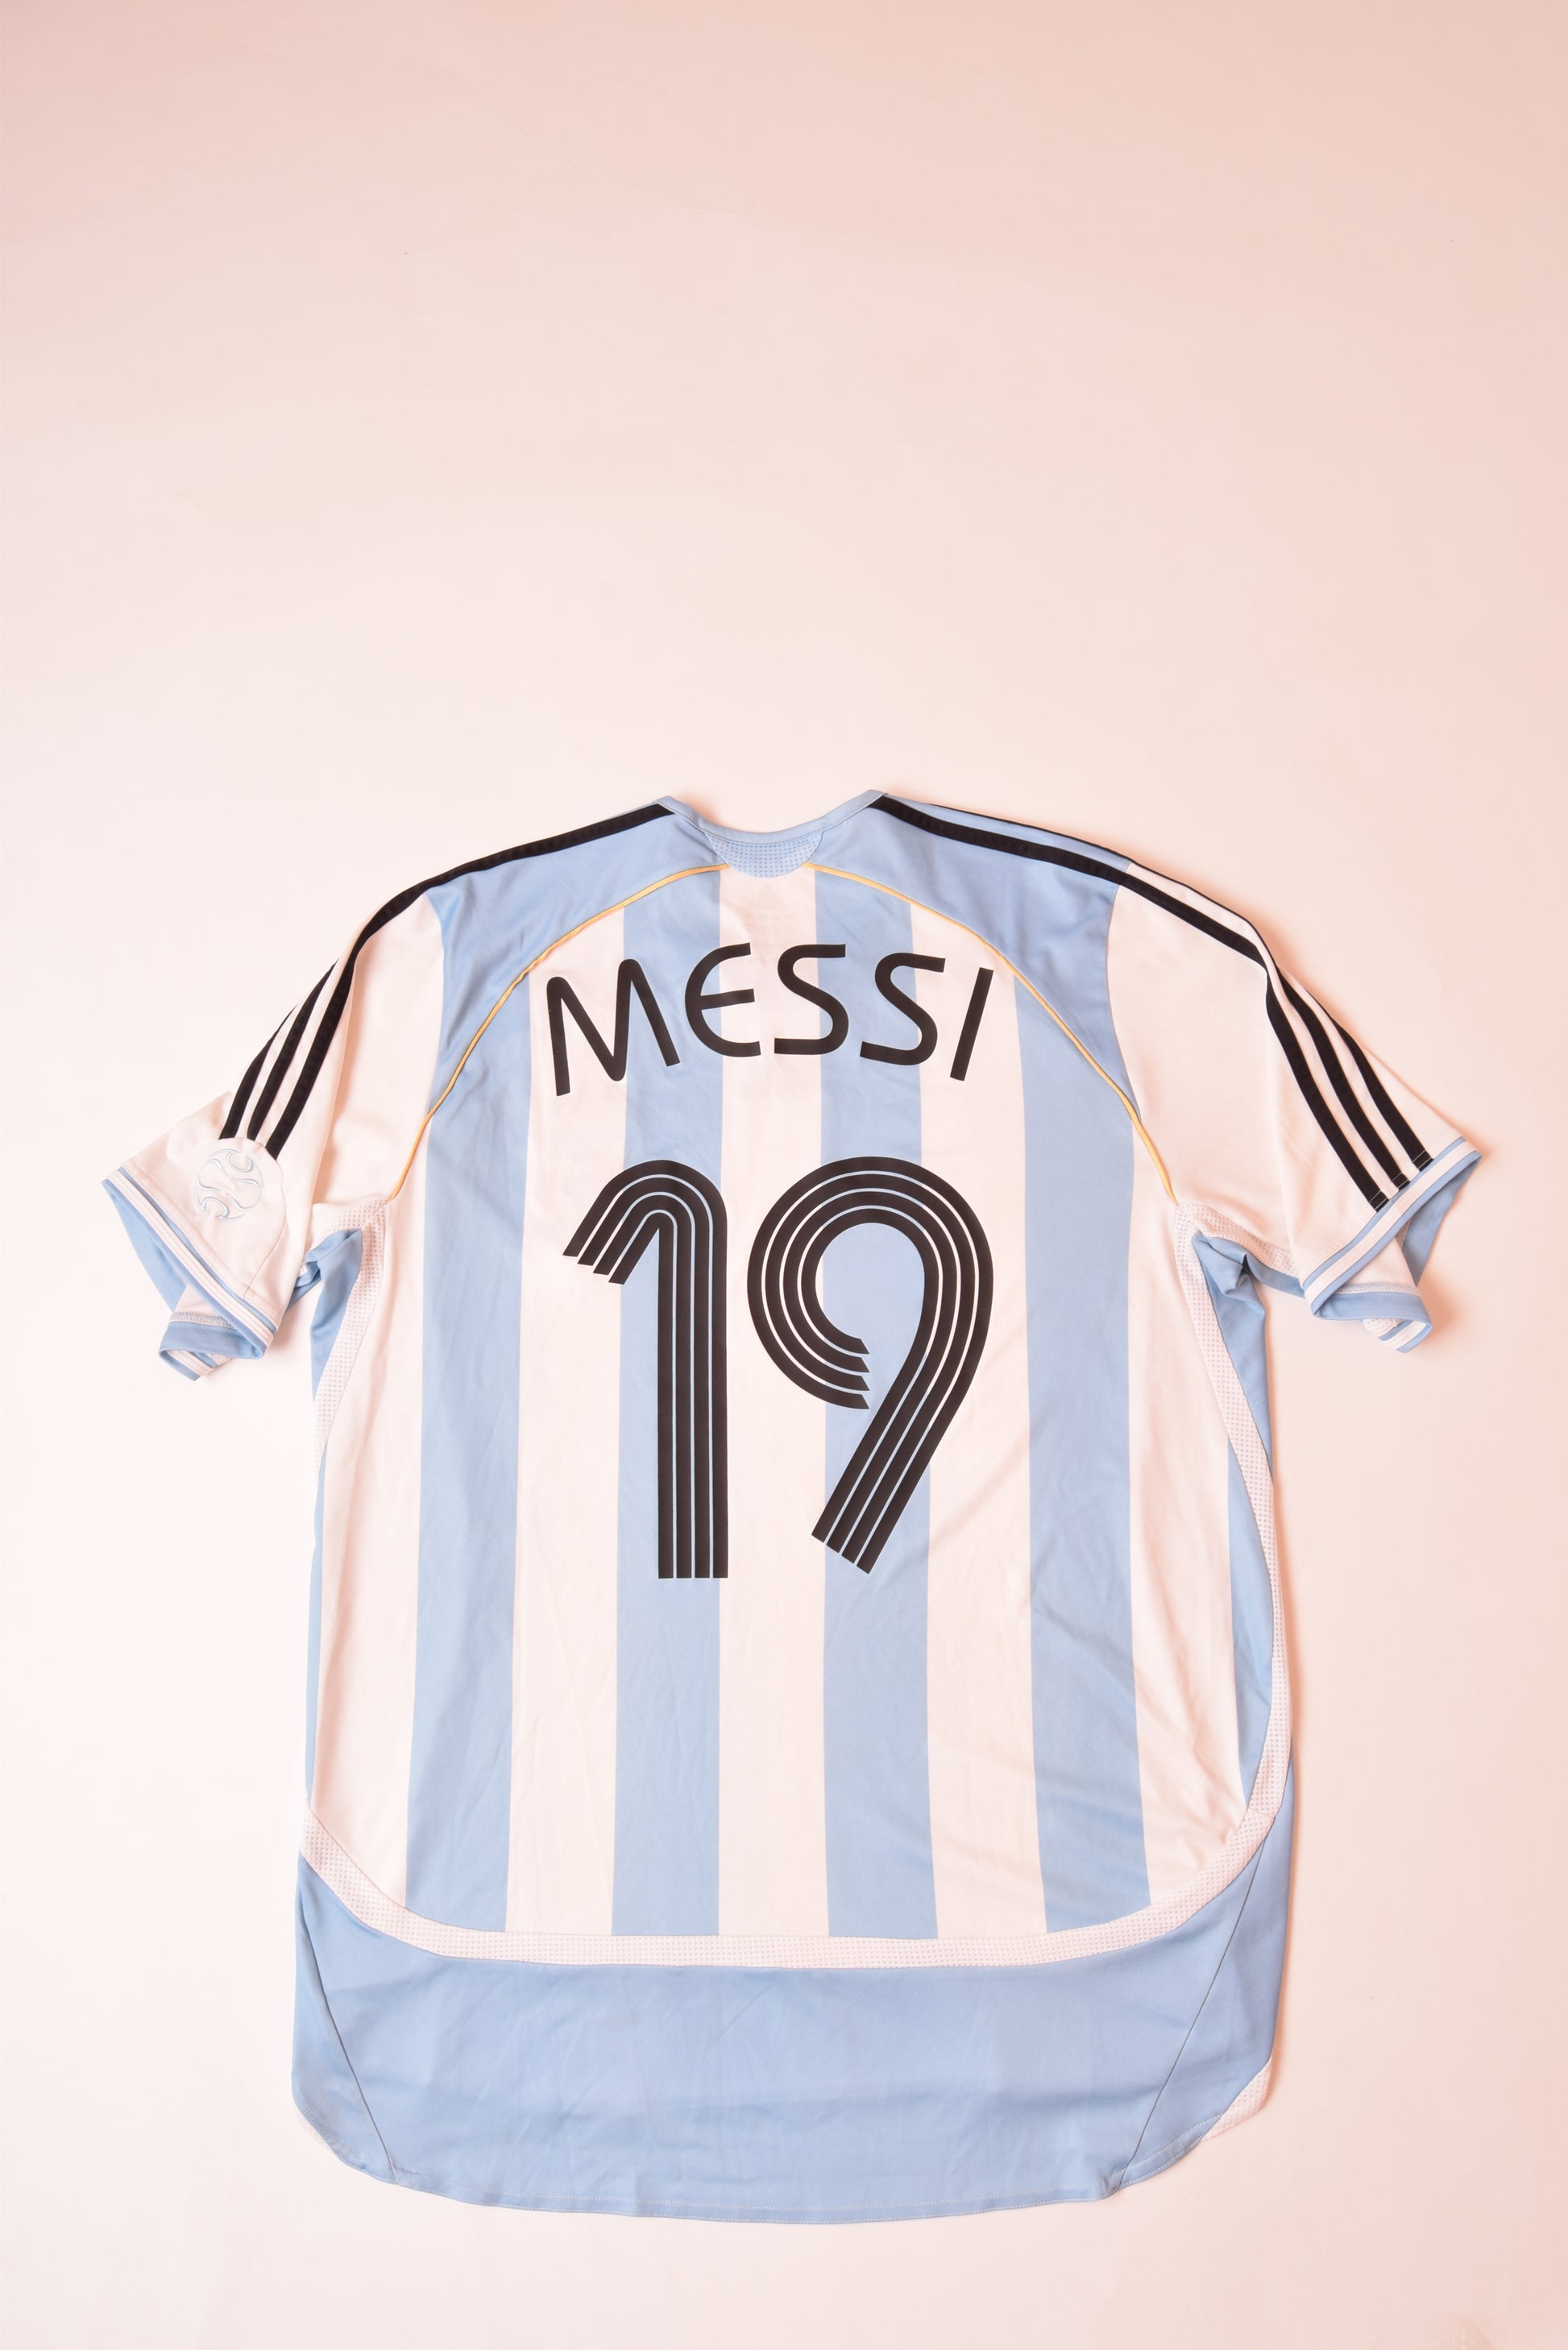 Adidas 2005-07 Argentina Home Football Shirt Messi #19 Size L